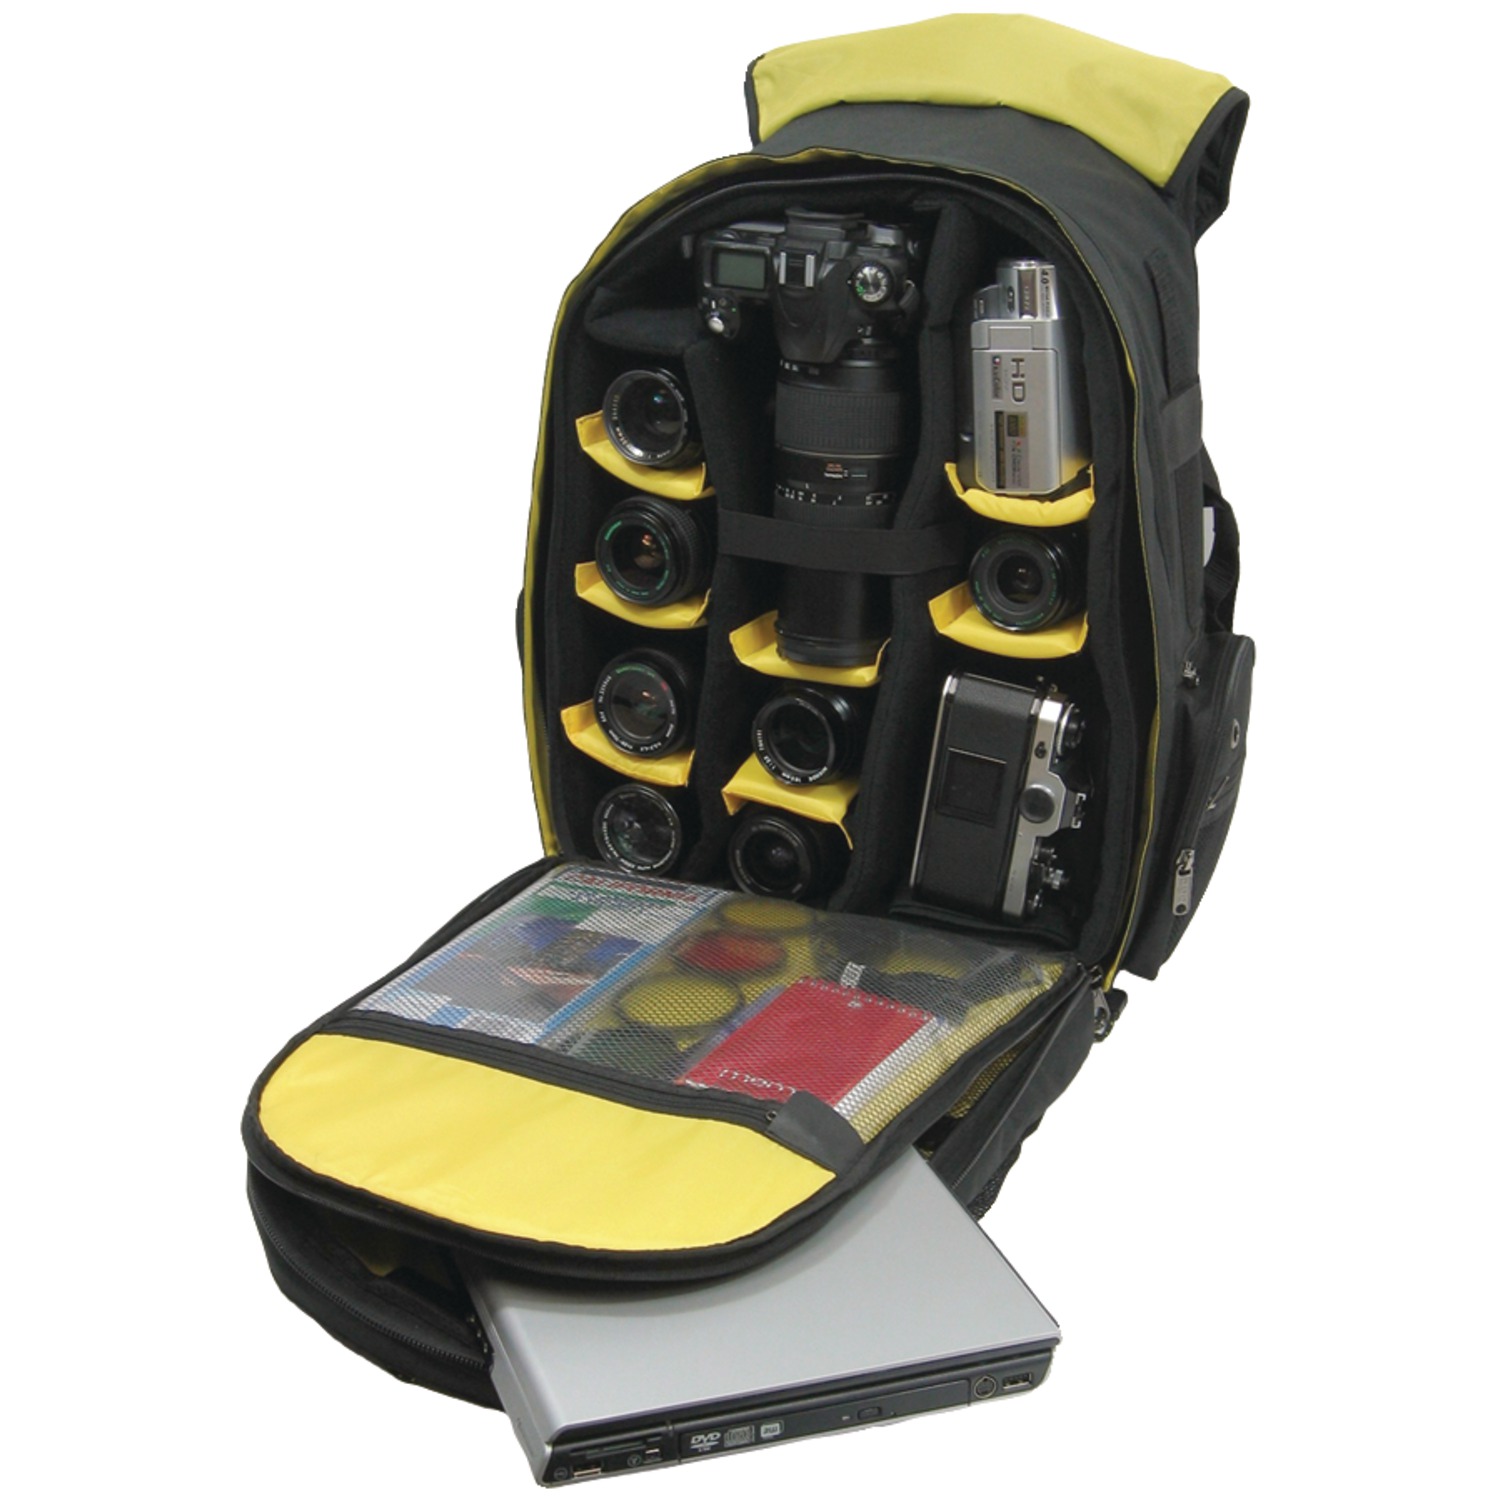 Ape Case Digital SLR and Laptop Backpack, ACPRO2000 - image 2 of 3